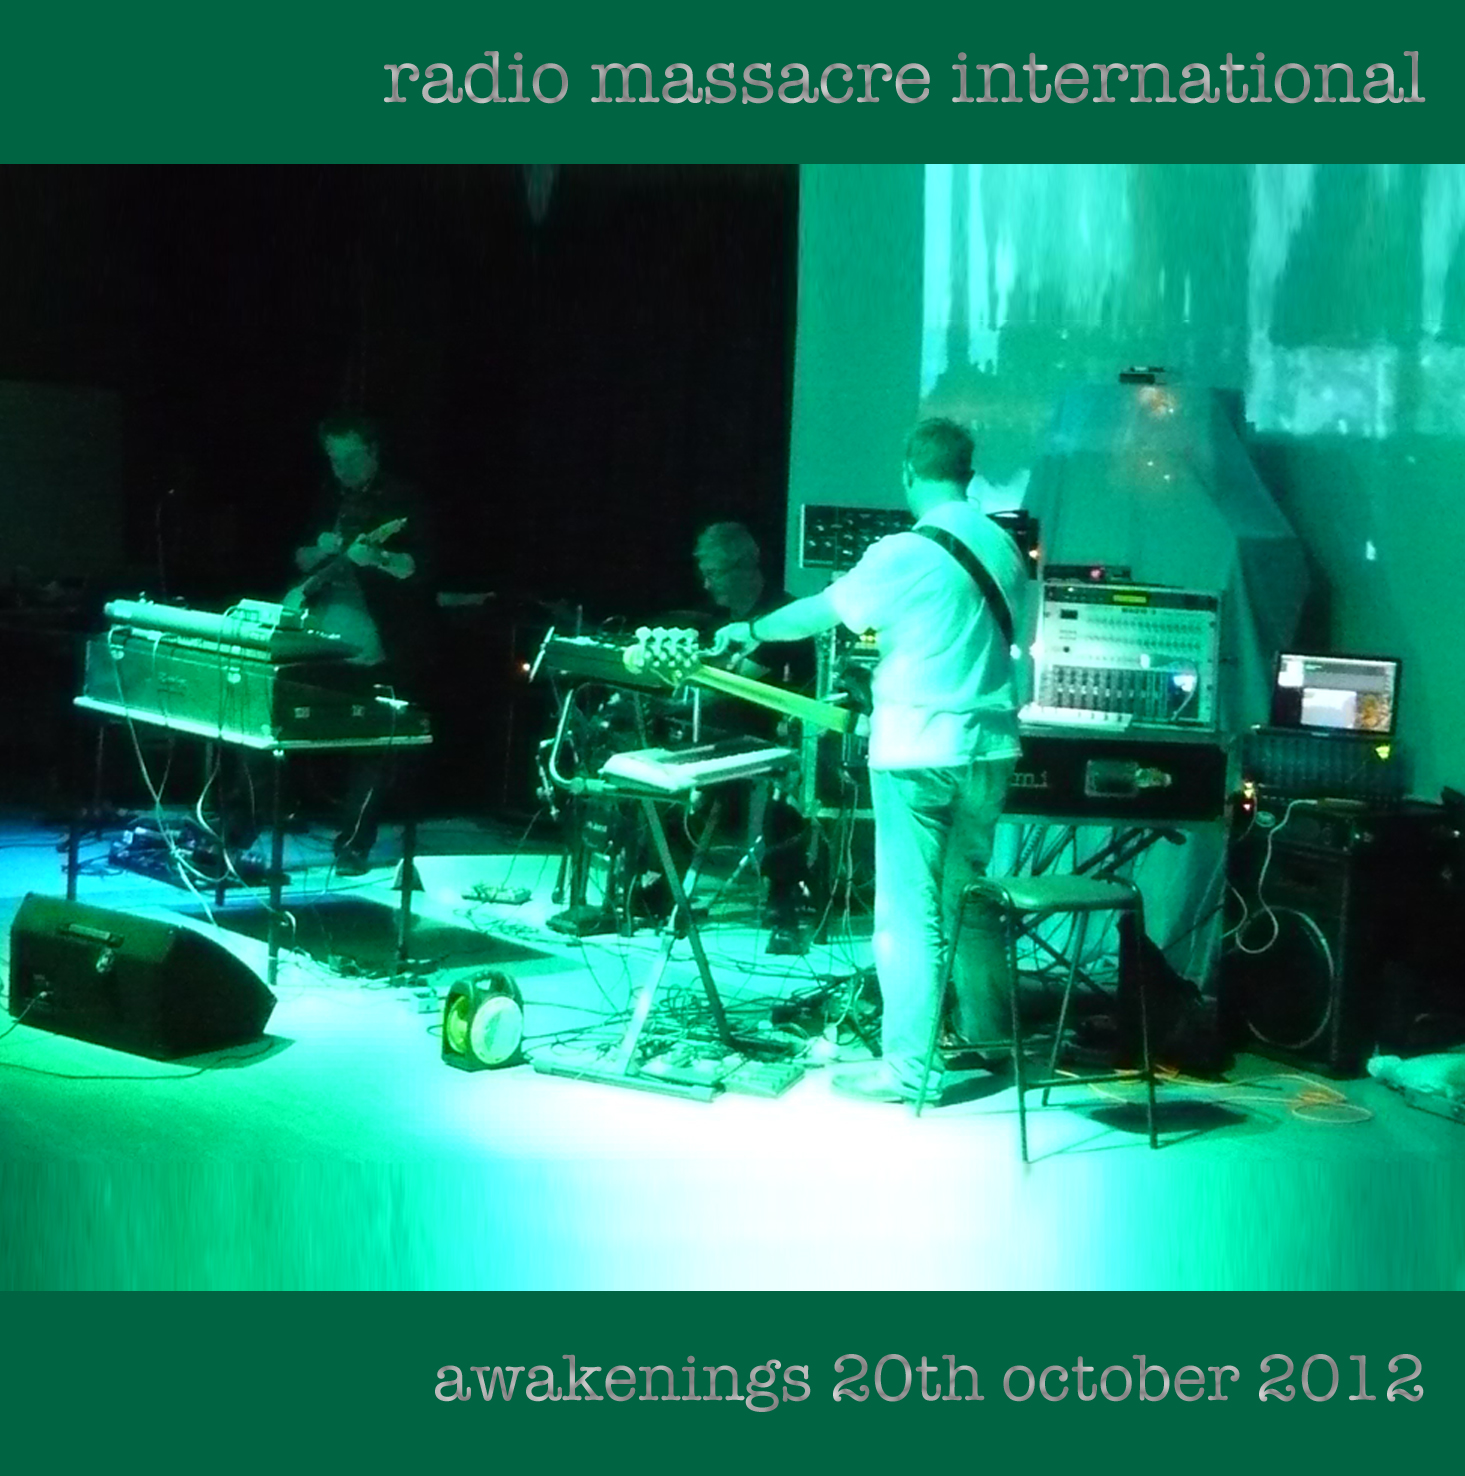 awakenings 20th october 2012